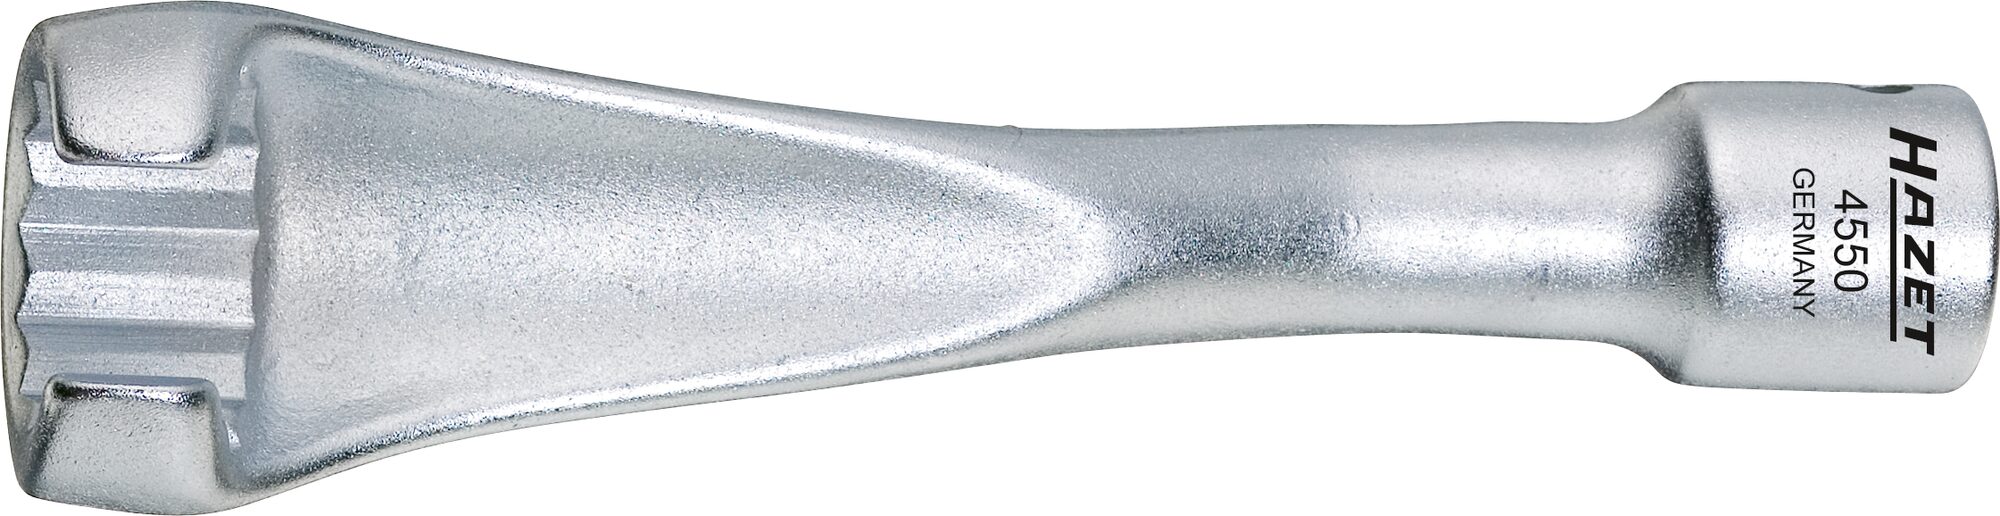 HAZET Einspritzleitungs-Schlüssel 4550 · Vierkant hohl 10 mm (3/8 Zoll) · Außen Doppel-Sechskant Profil · 17 mm